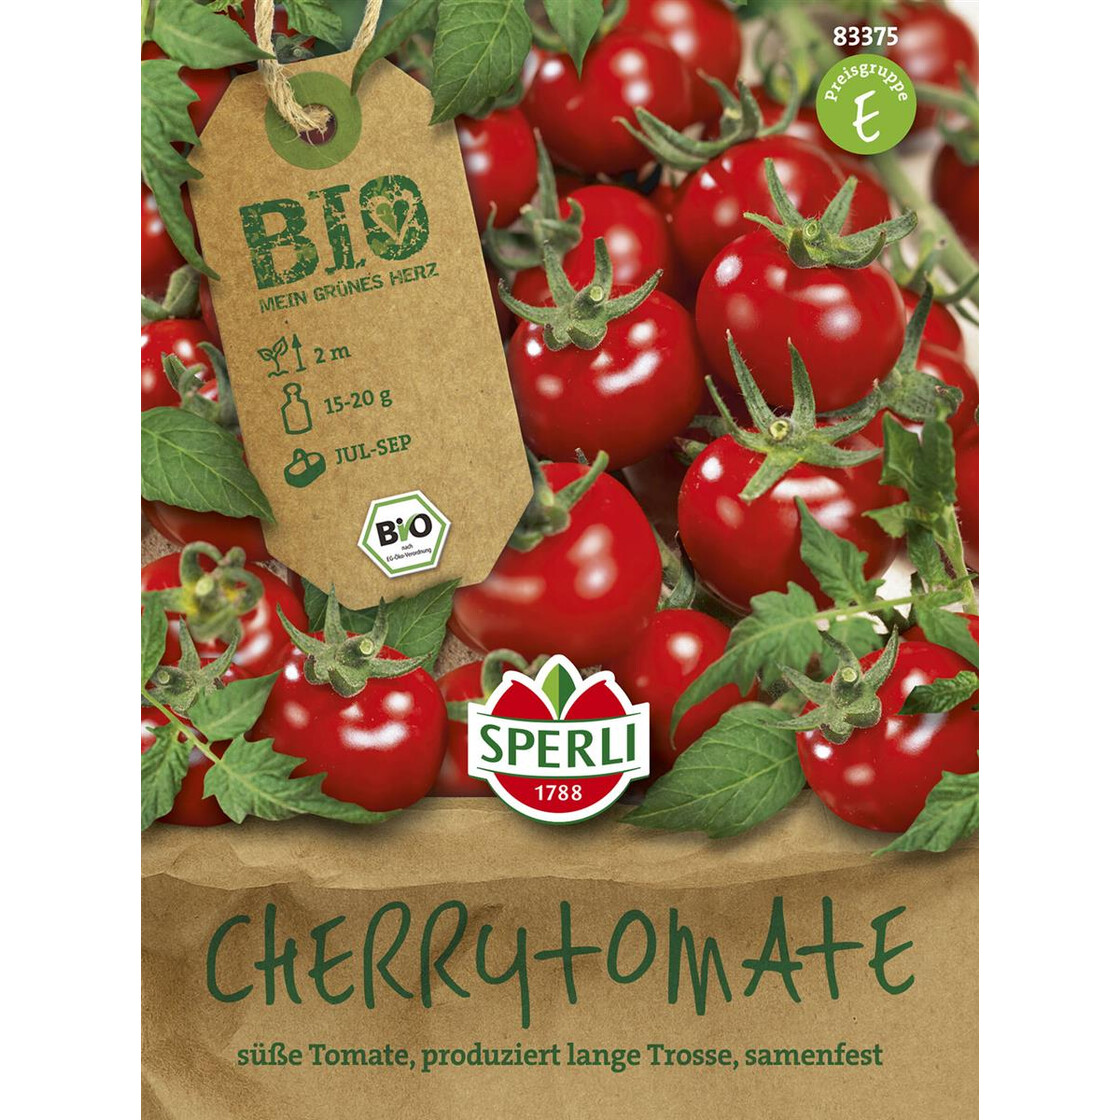 Cherrytomate / BIO Zuckertraube - süße Tomate, produziert lange Tross ...